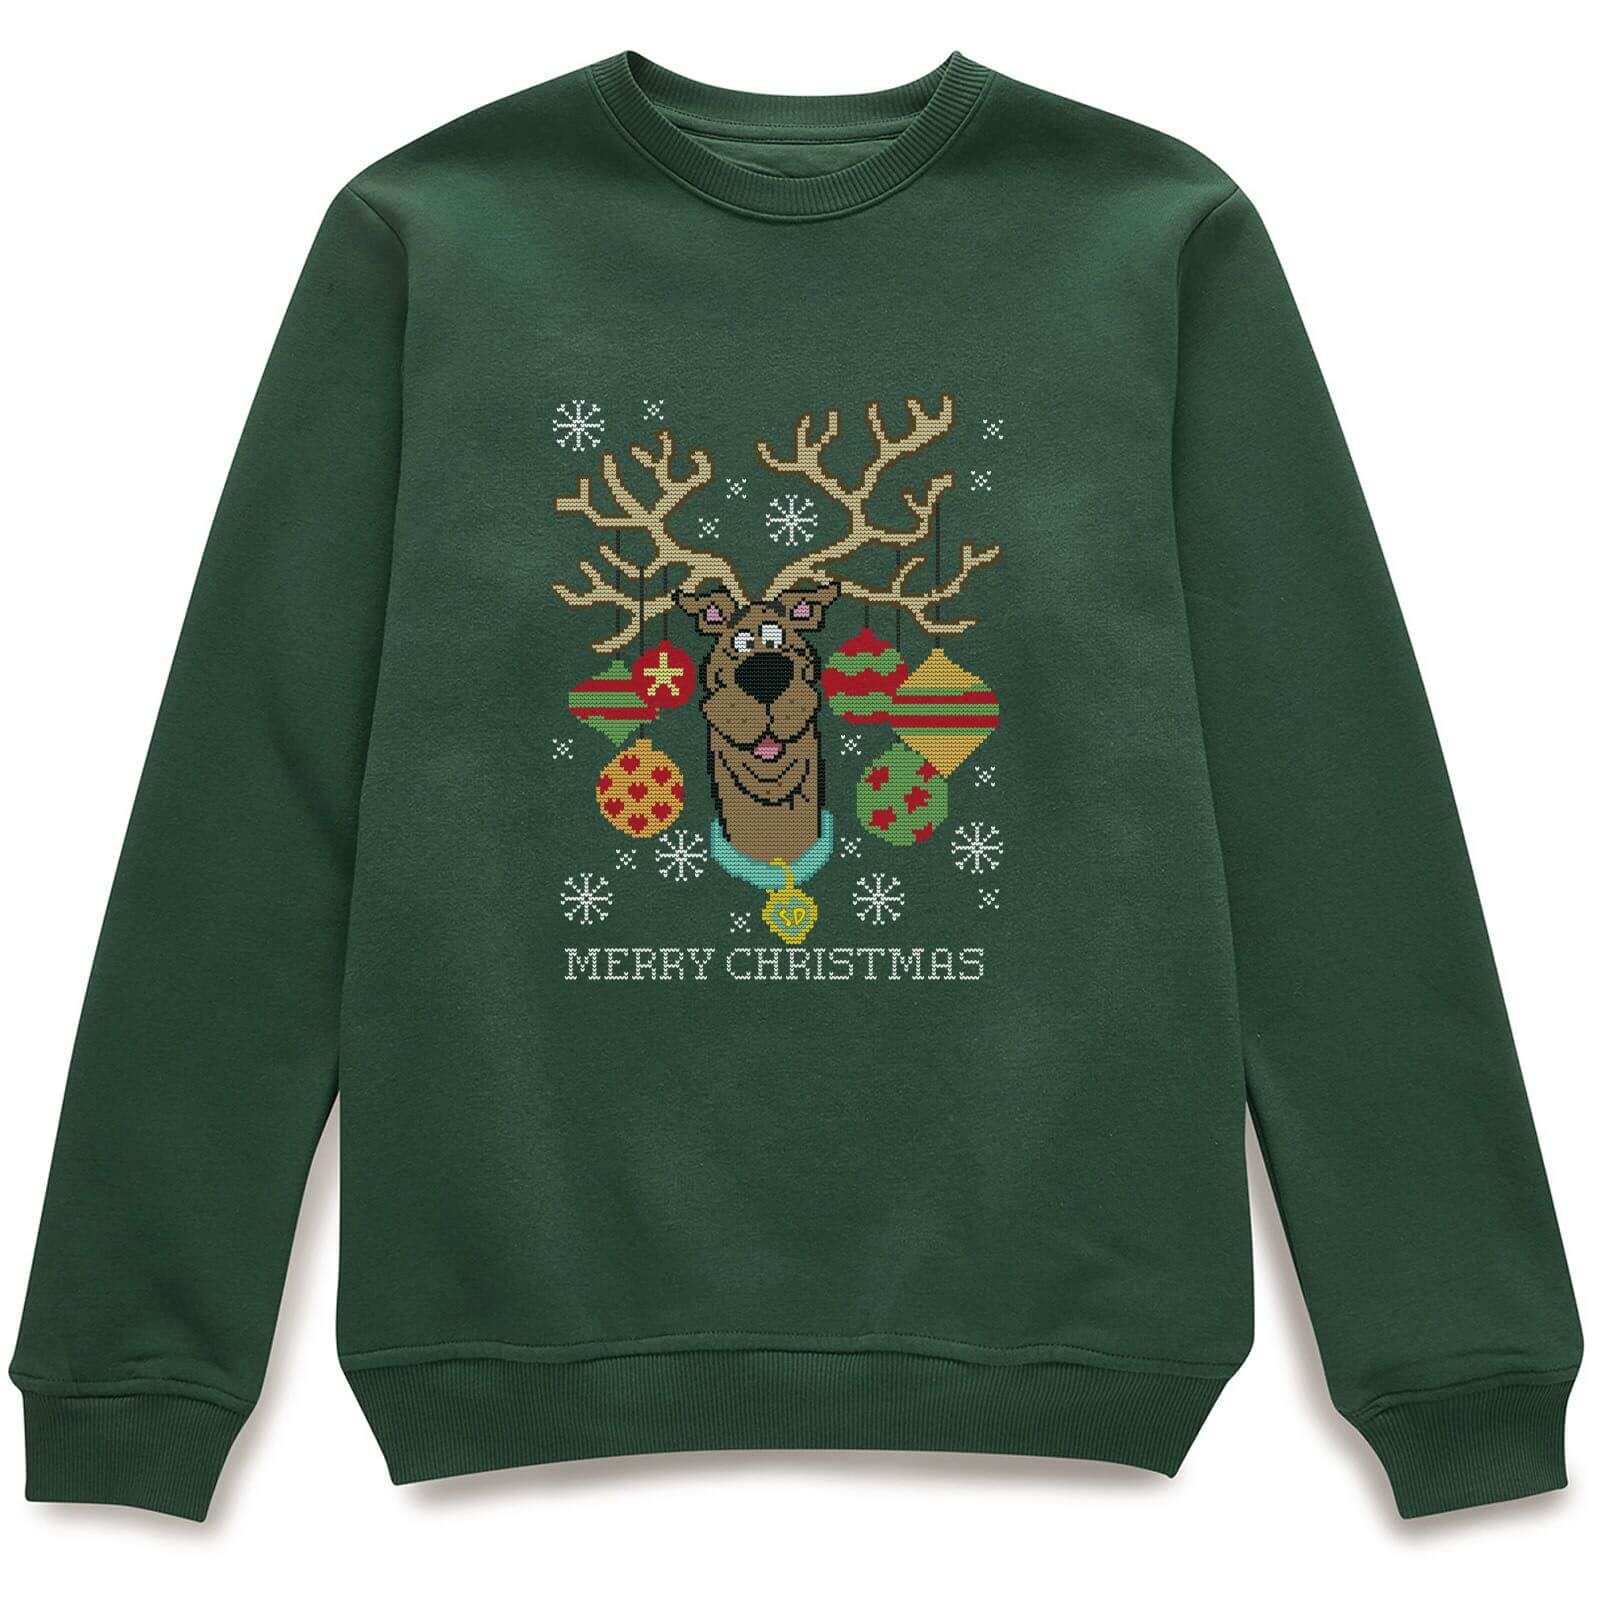 Scooby Doo Christmas Sweatshirt - Forest Green - XL